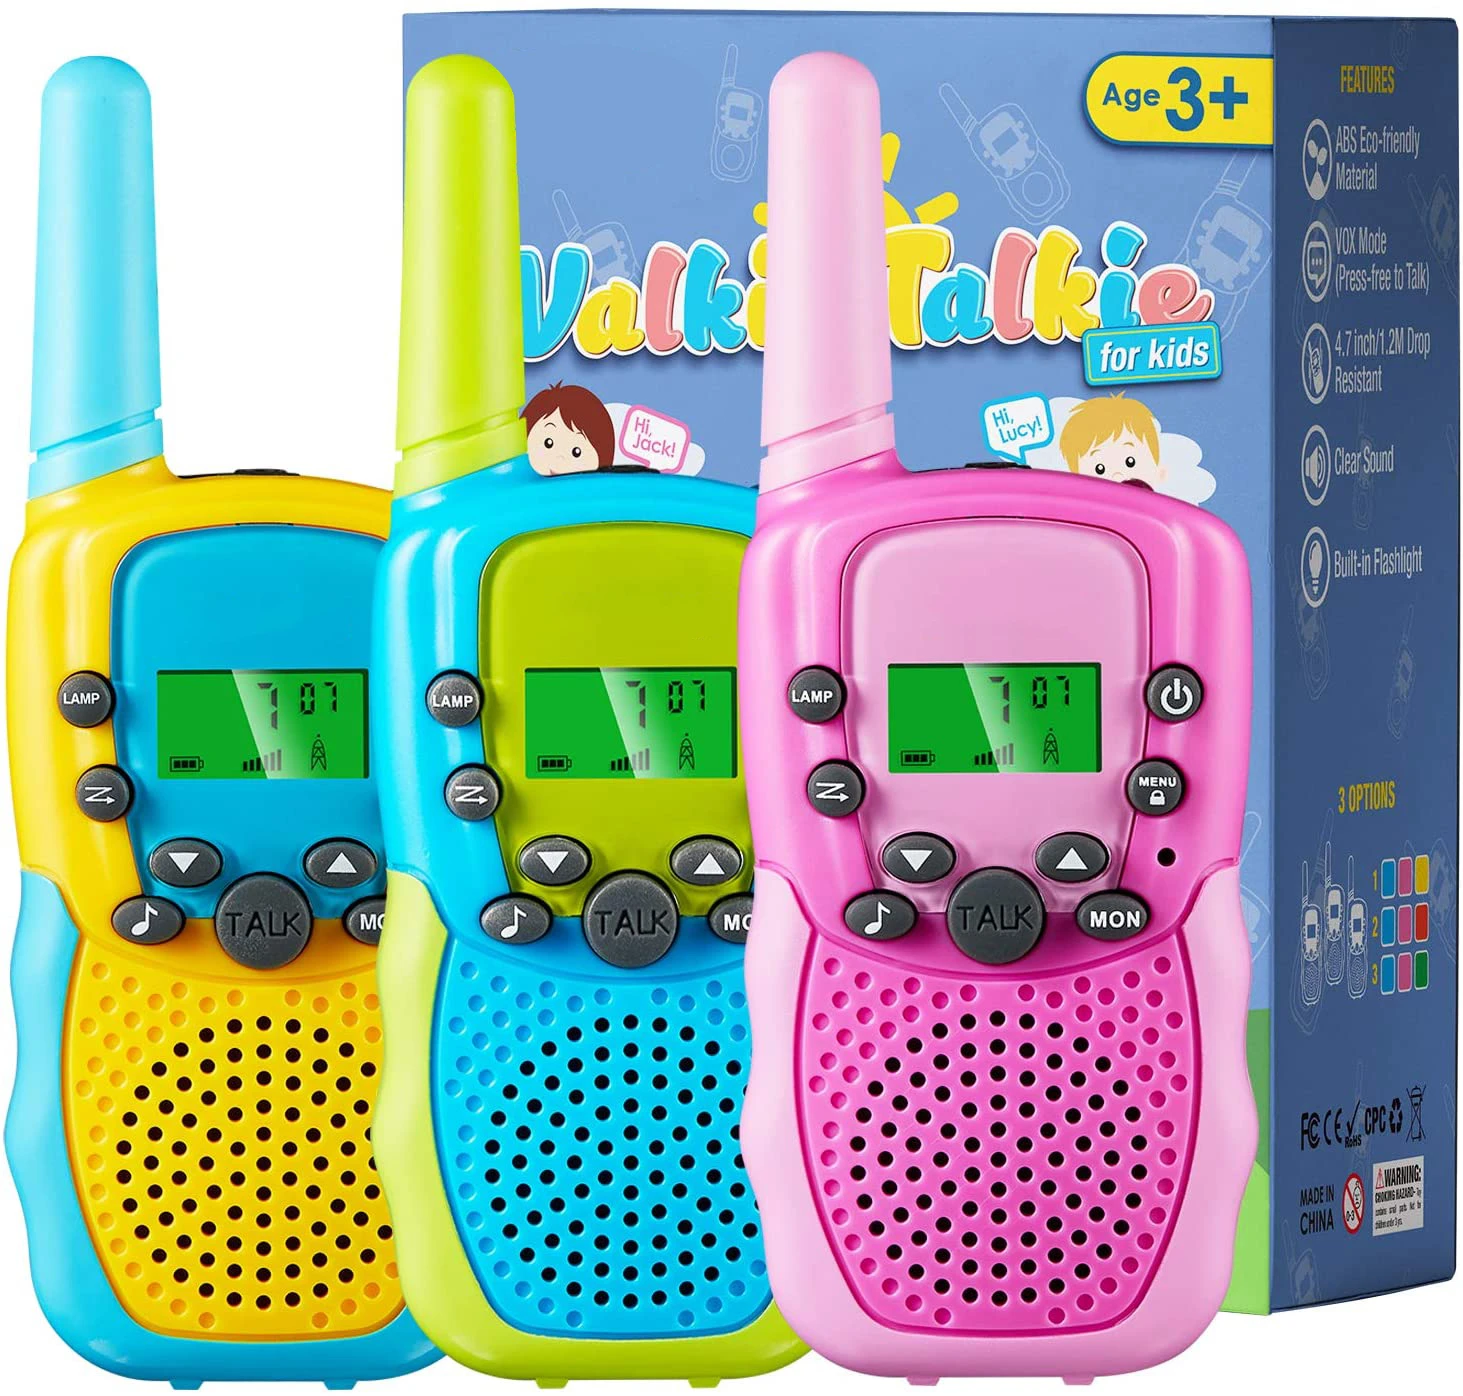 Kids Walkie Talkie Two Ways Radio Toy Walkie Talkie for Kids 3 Miles Range 22 Channels Built in Flash Light